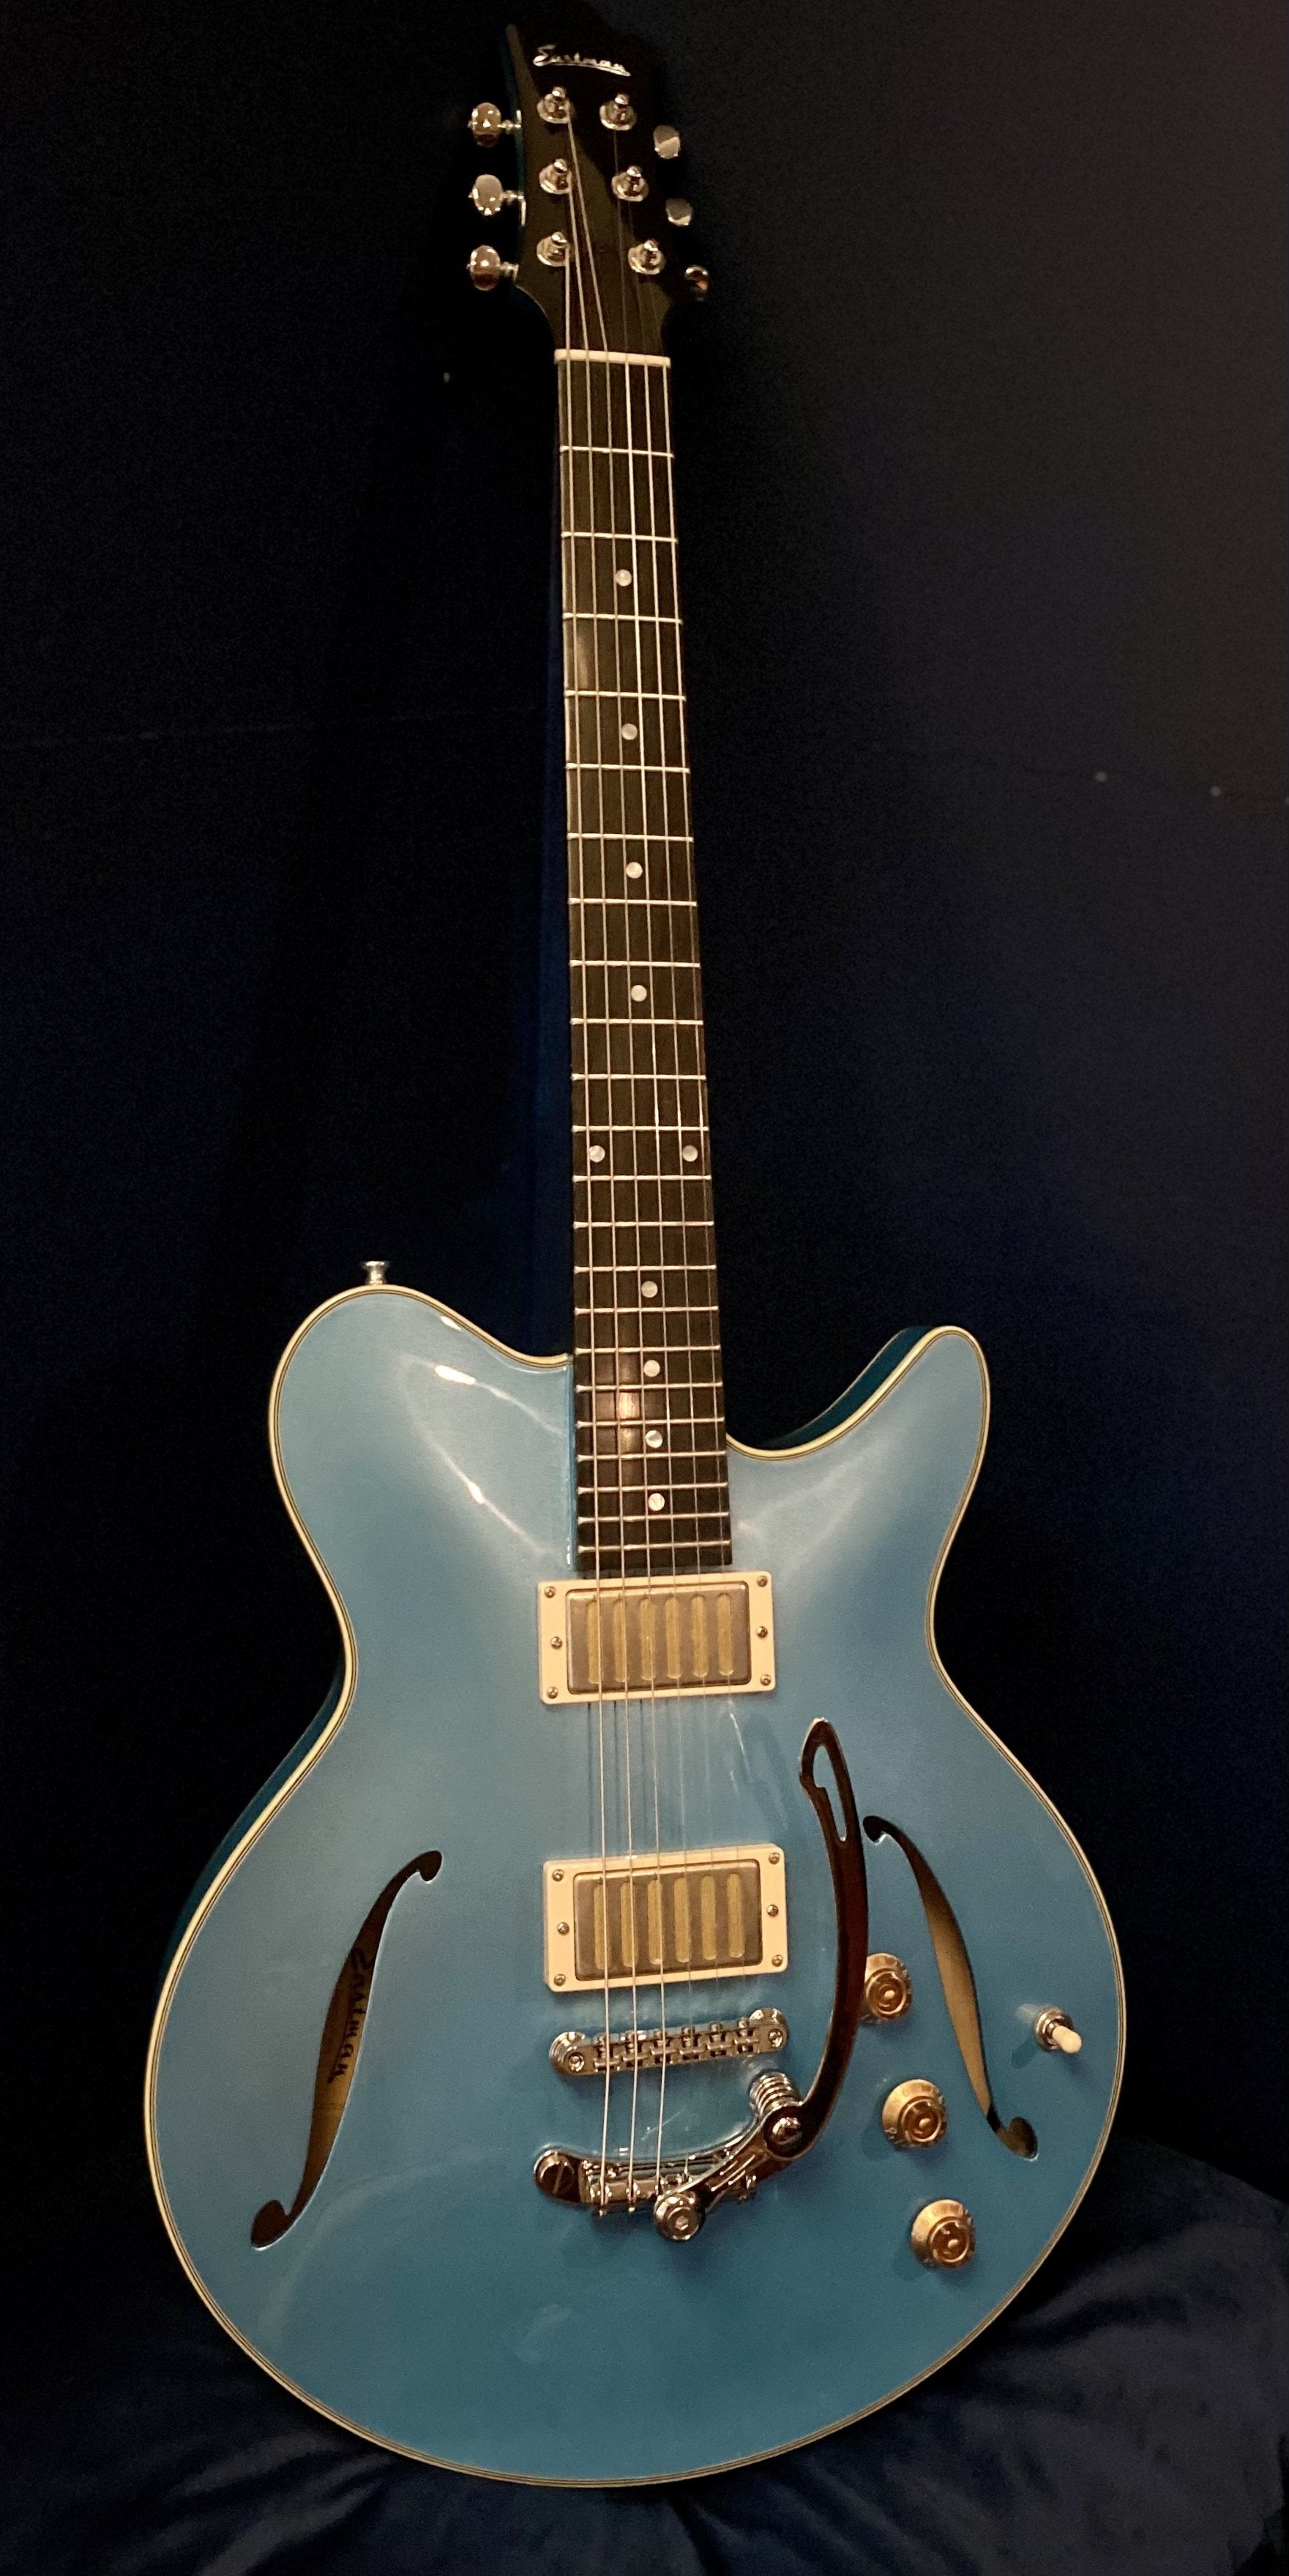 Eastman Romeo LA Celestine Blue, Electric Guitar for sale at Richards Guitars.